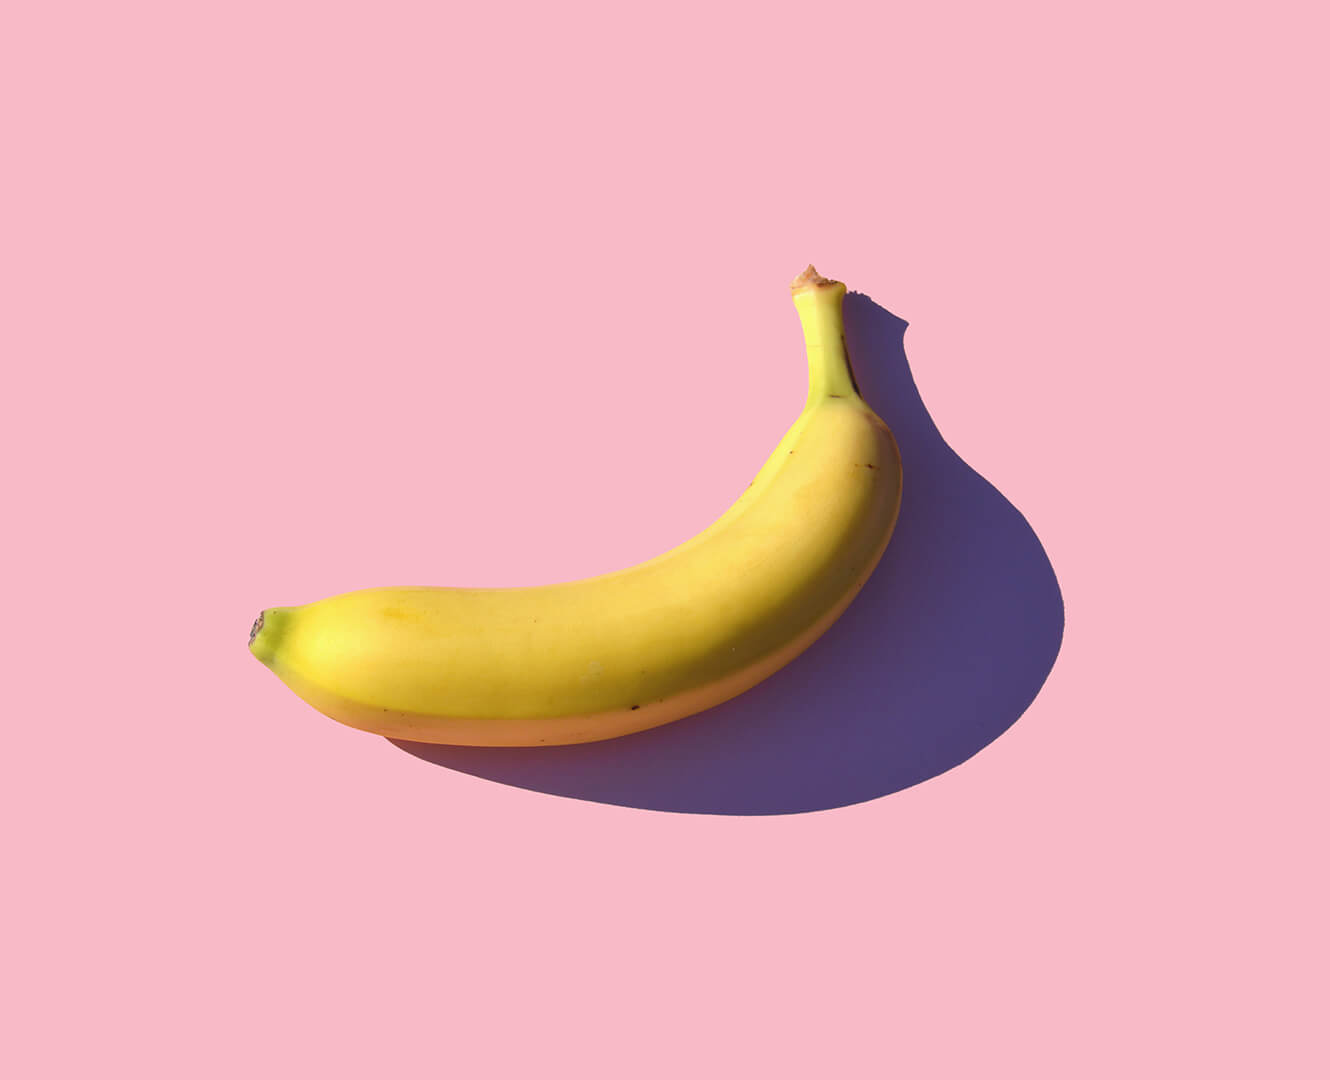 Banana on pink backdrop.